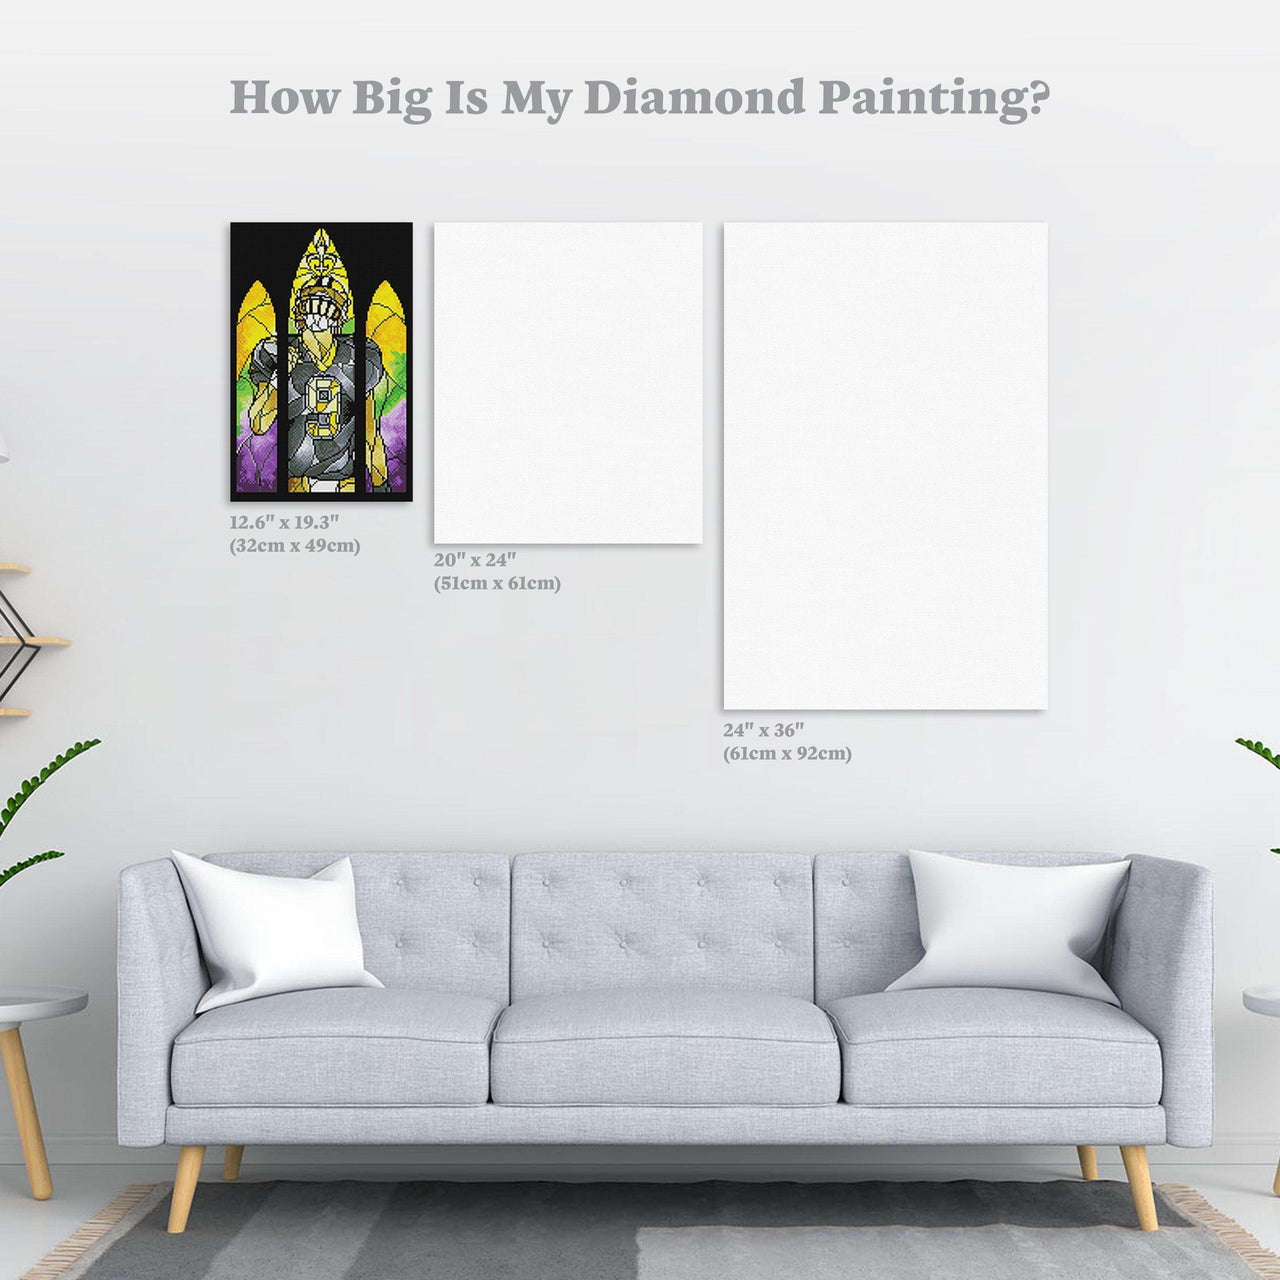 Diamond Painting Saint Breeze 12.6" x 19.3" (32cm x 49cm) / Round With 30 Colors including 2 ABs / 19,548